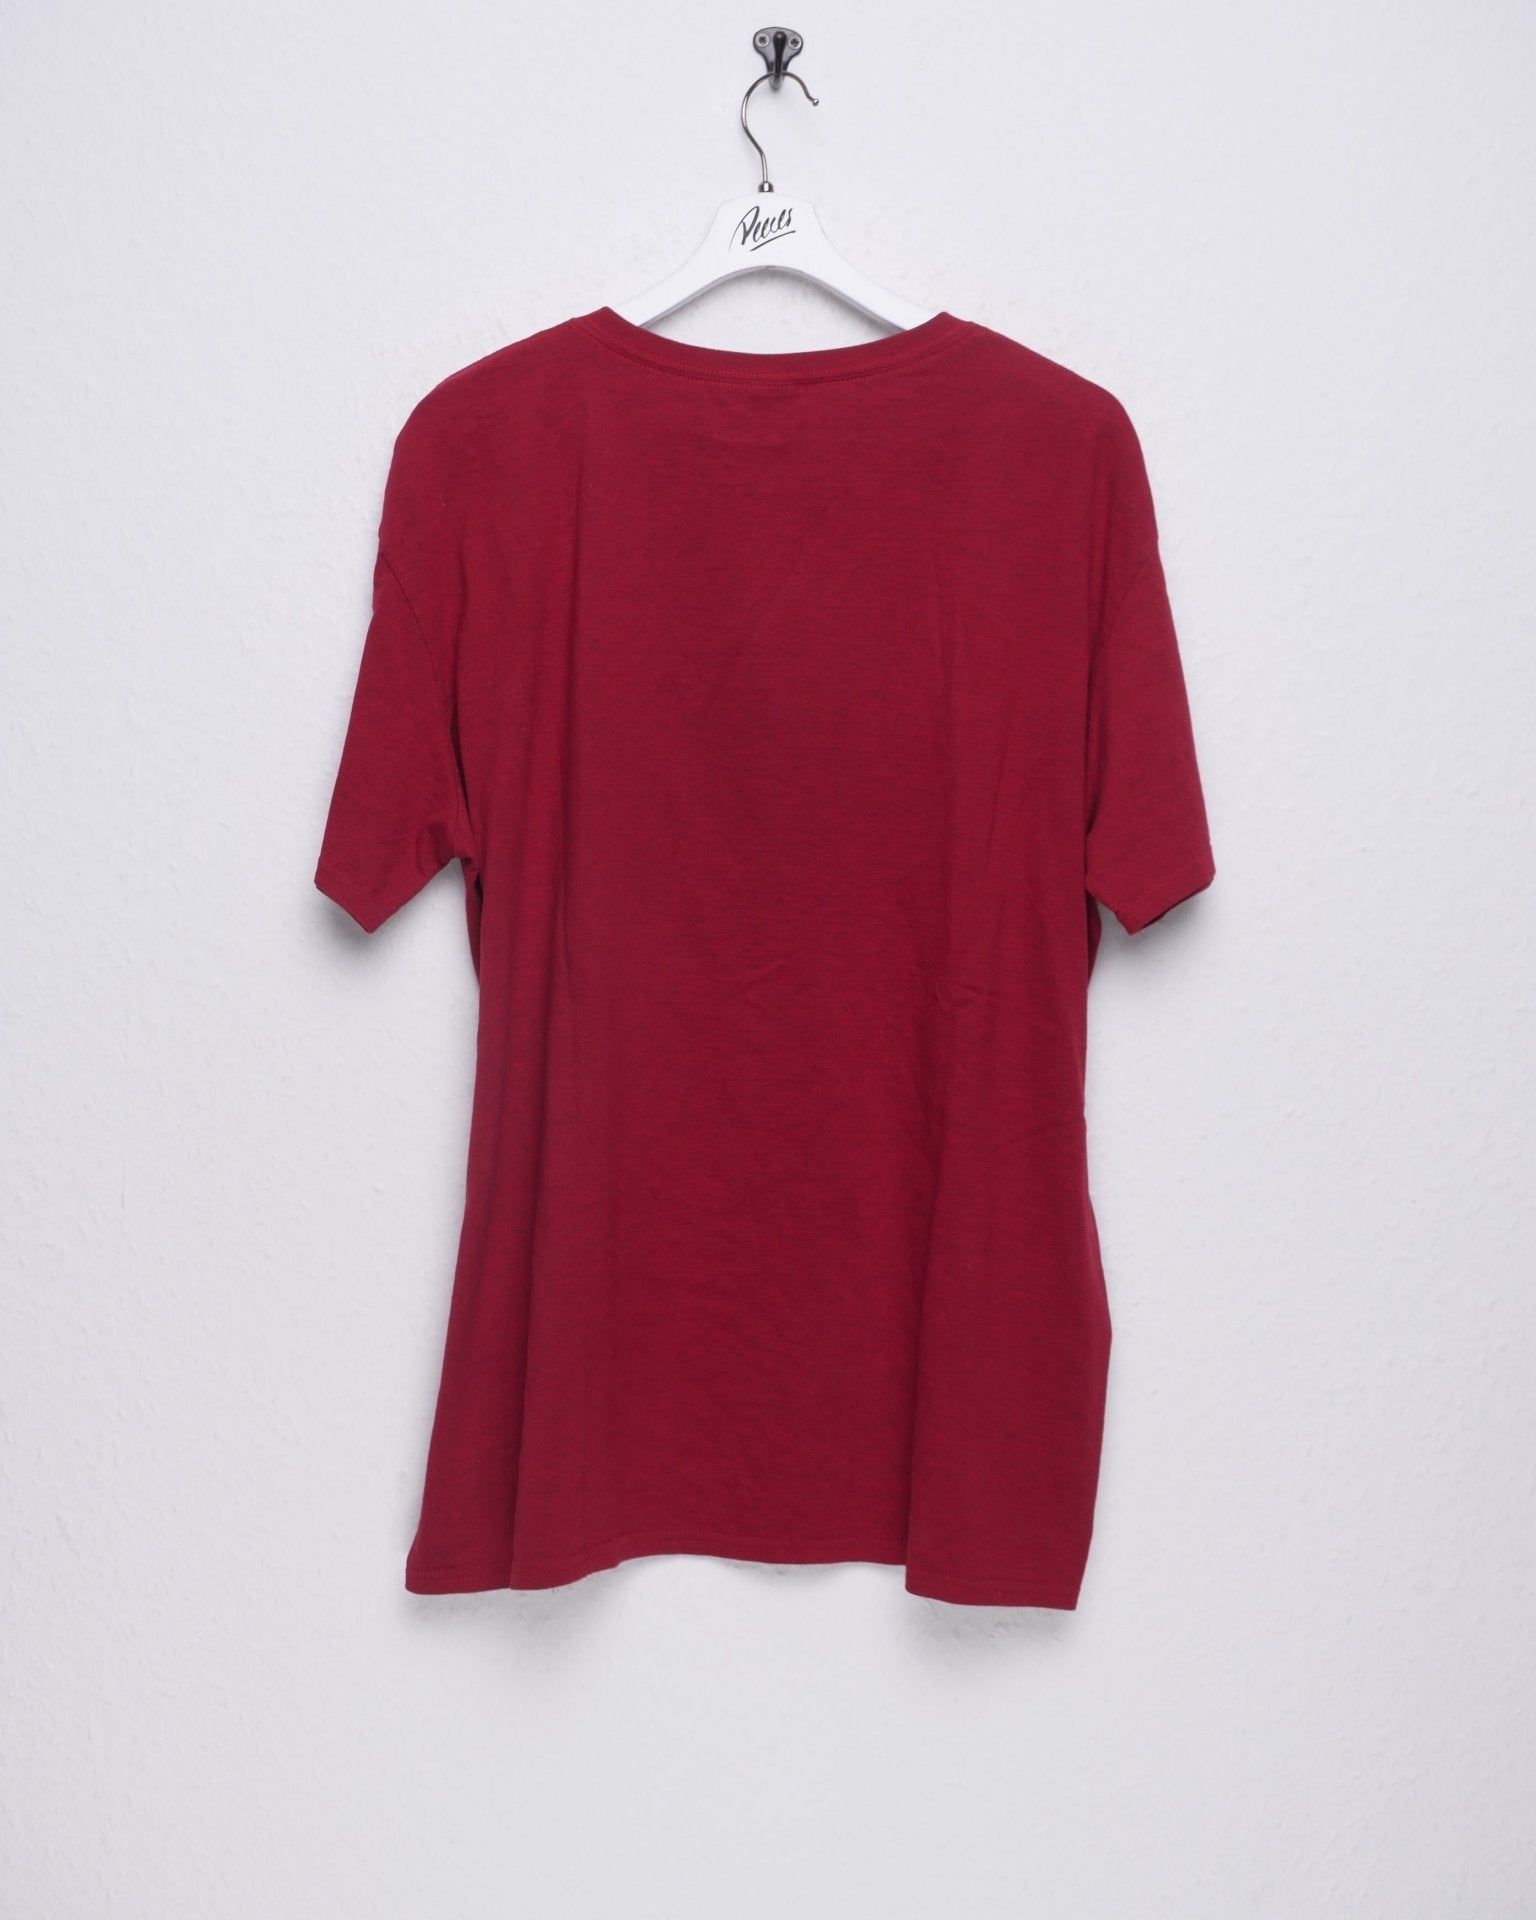 printed smoky hill red Shirt - Peeces